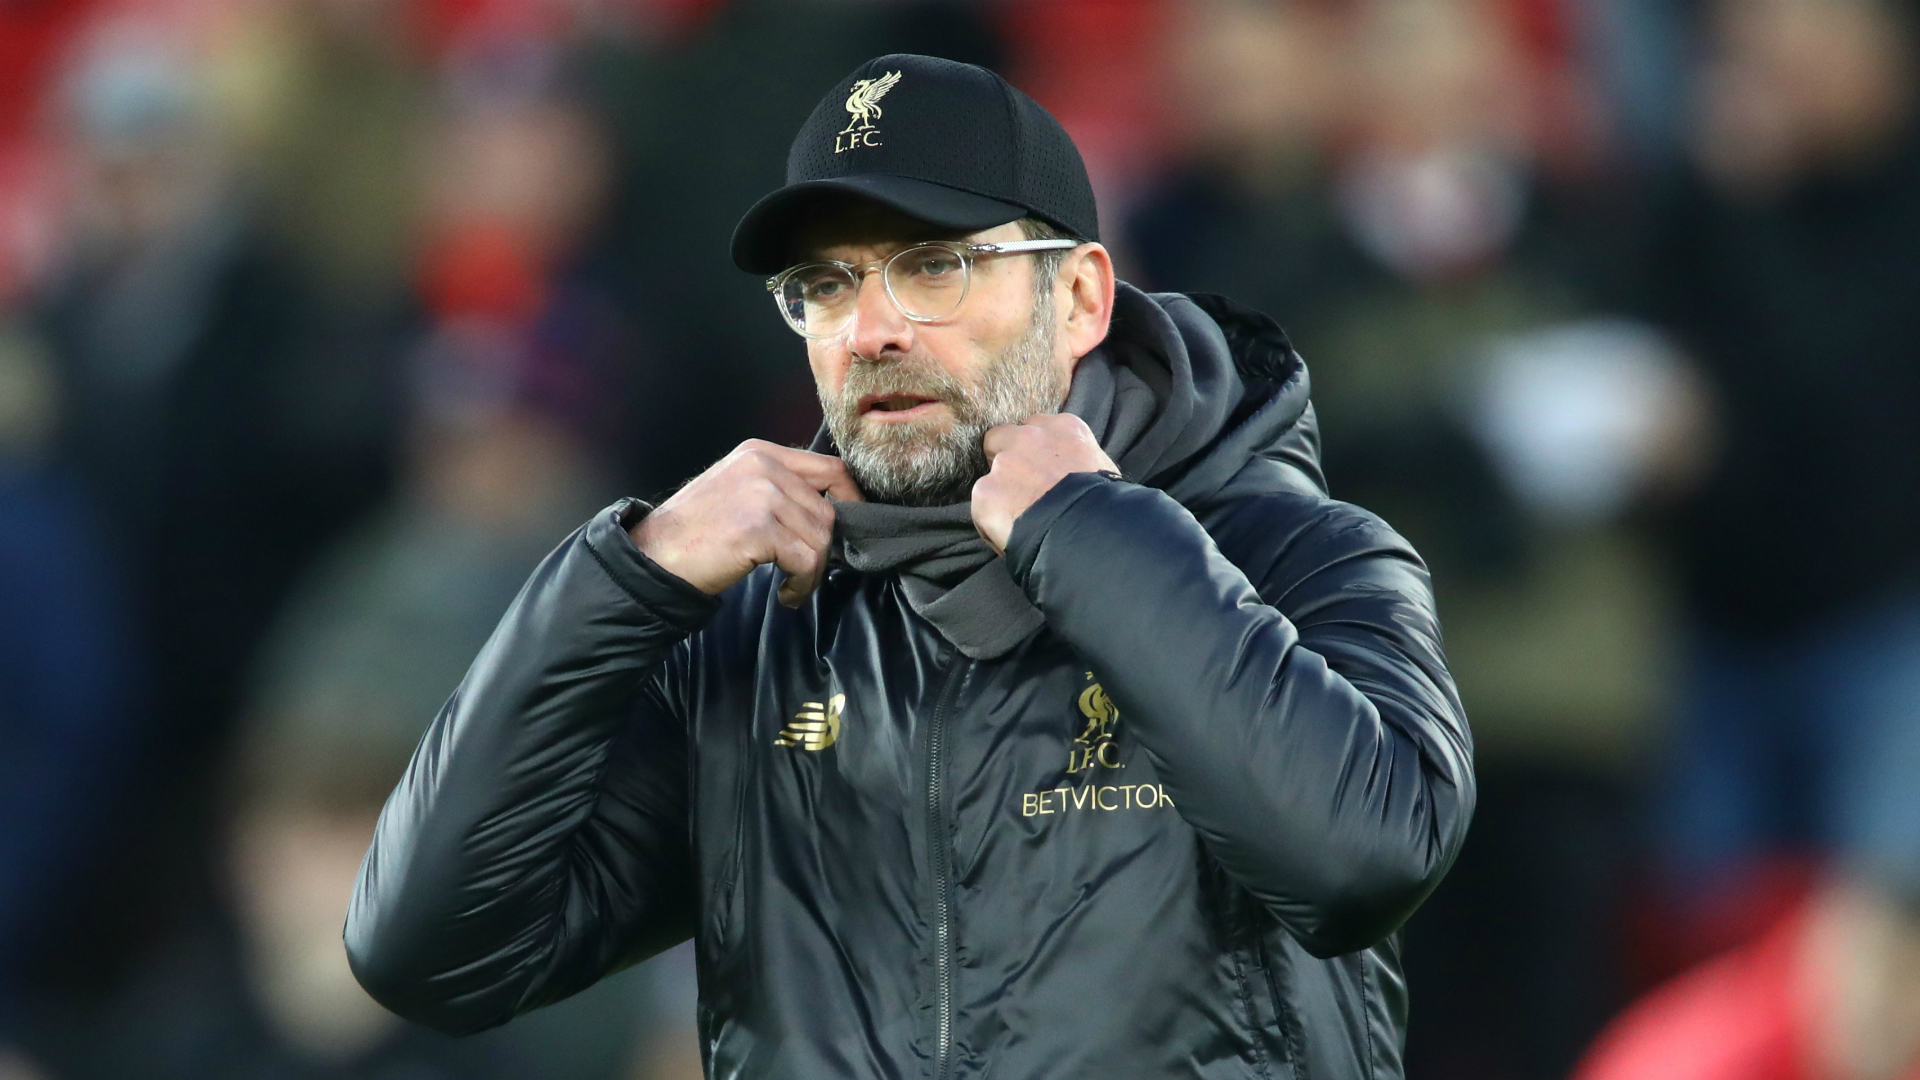 Liverpool boss Jurgen Klopp praised Manchester United's development under Ole Gunnar Solskjaer ahead of Sunday's Premier League encounter.